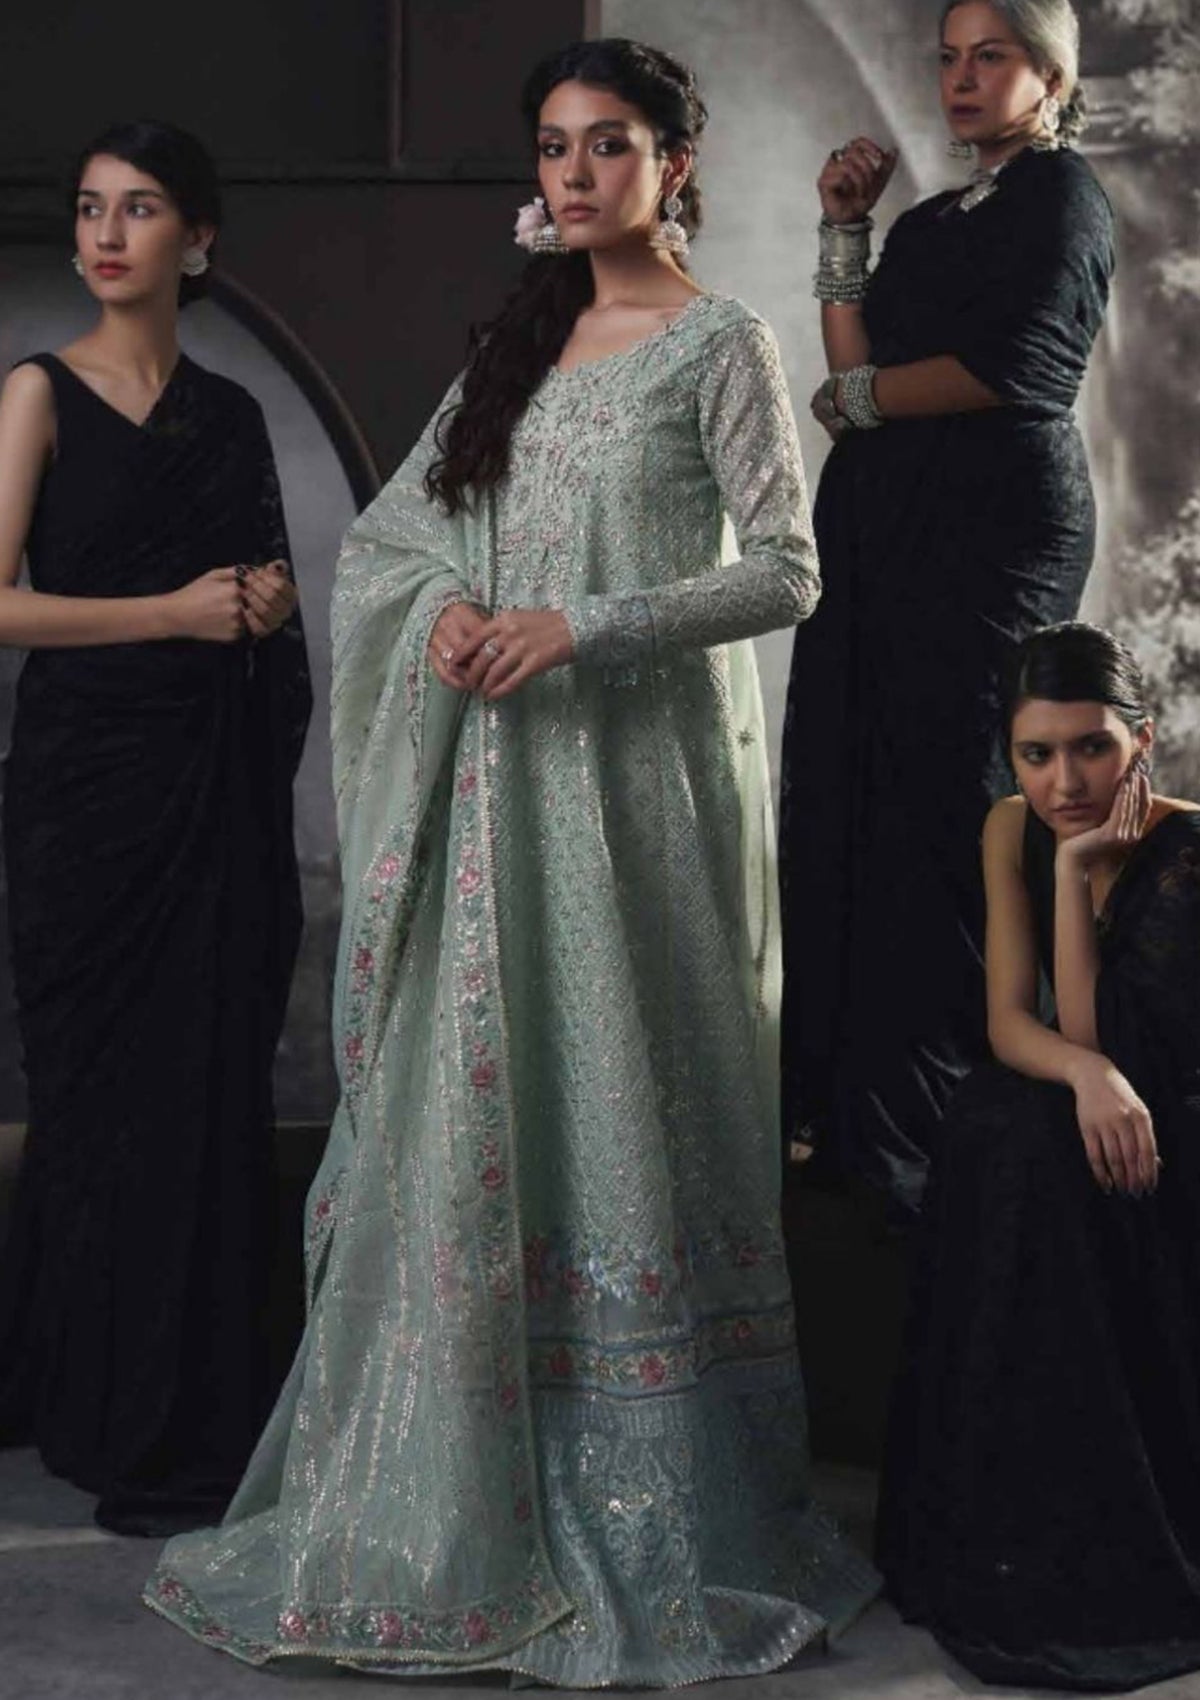 Formal Collection - Mushq - Qala - Kamdani - Luxury - MCK#02 Haniya